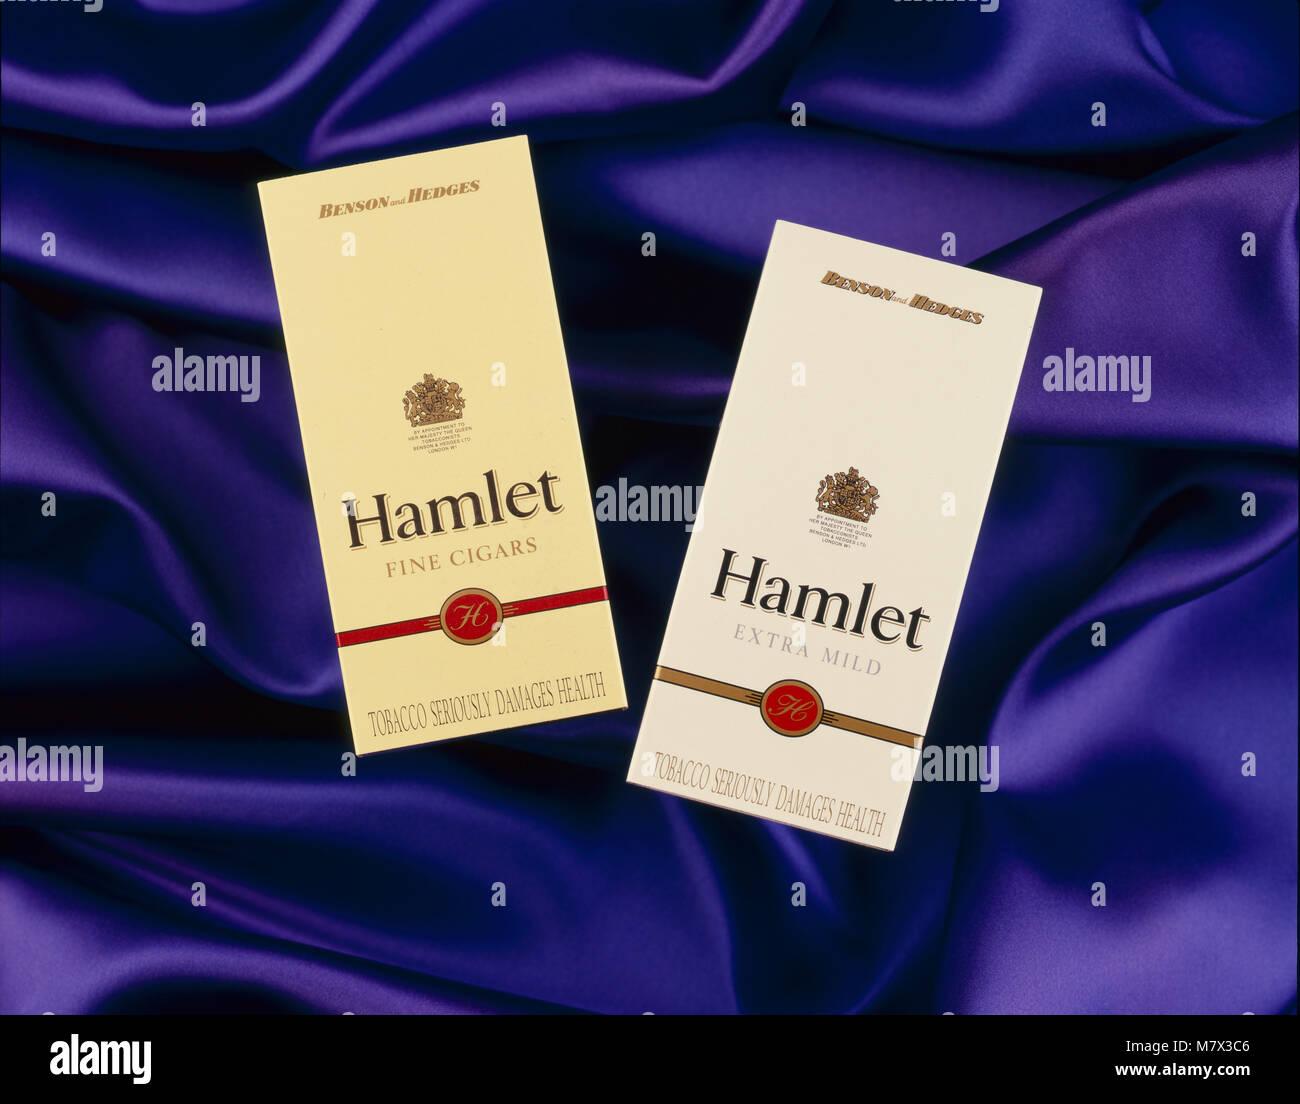 Hamlet cigar packaging Stock Photo